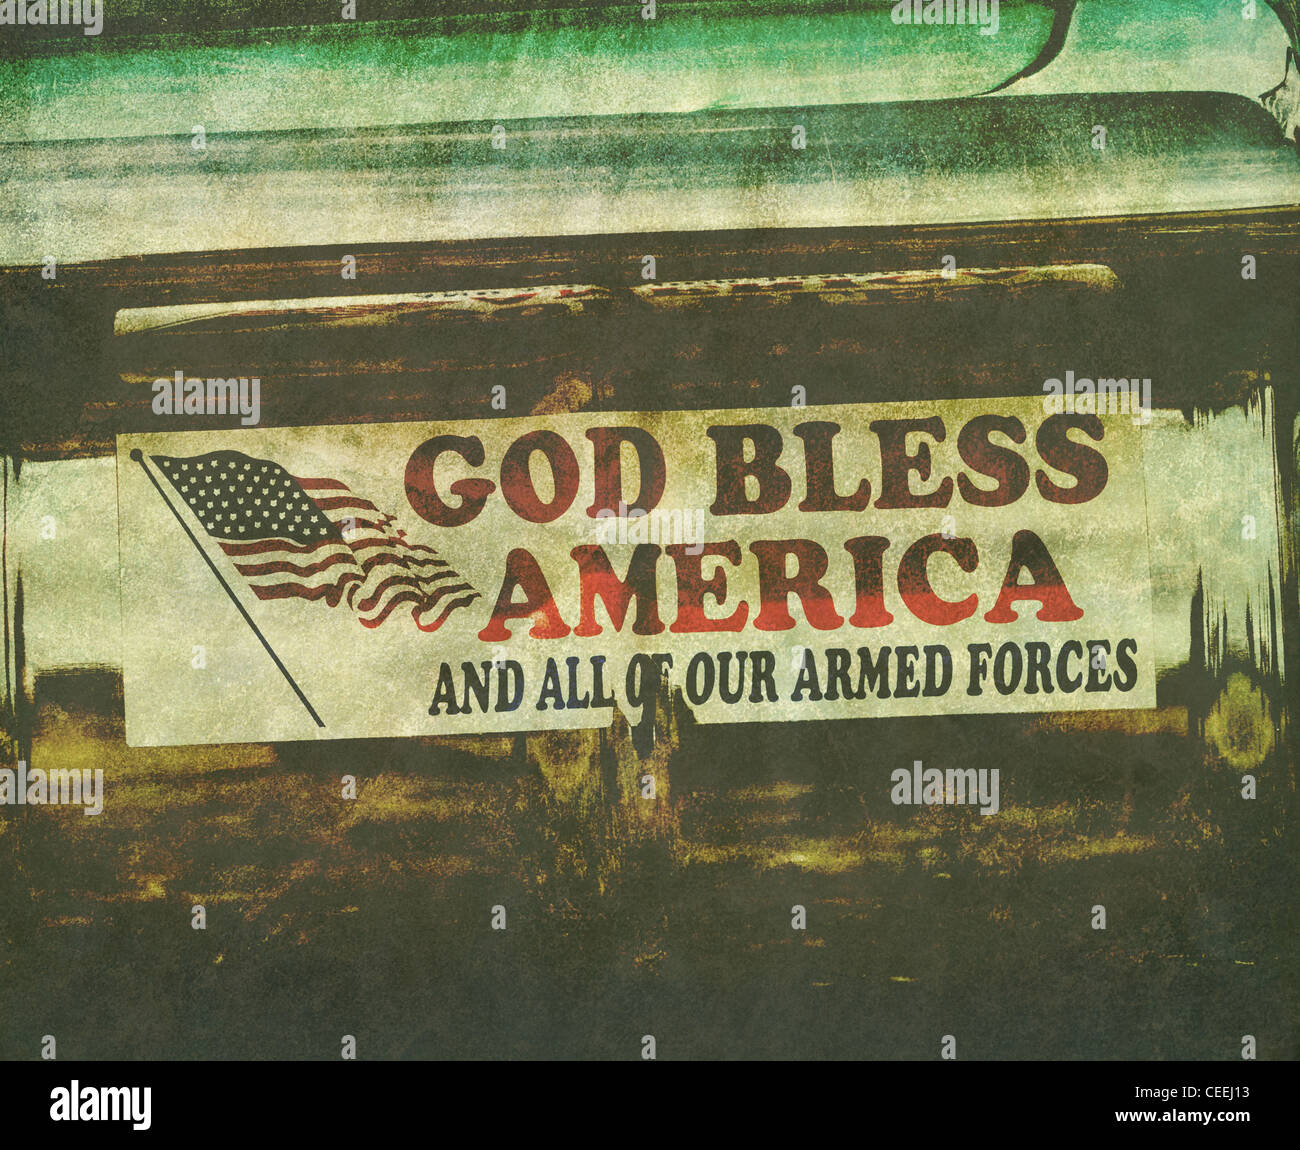 God Bless America Stock Photos & God Bless America Stock Images - Alamy